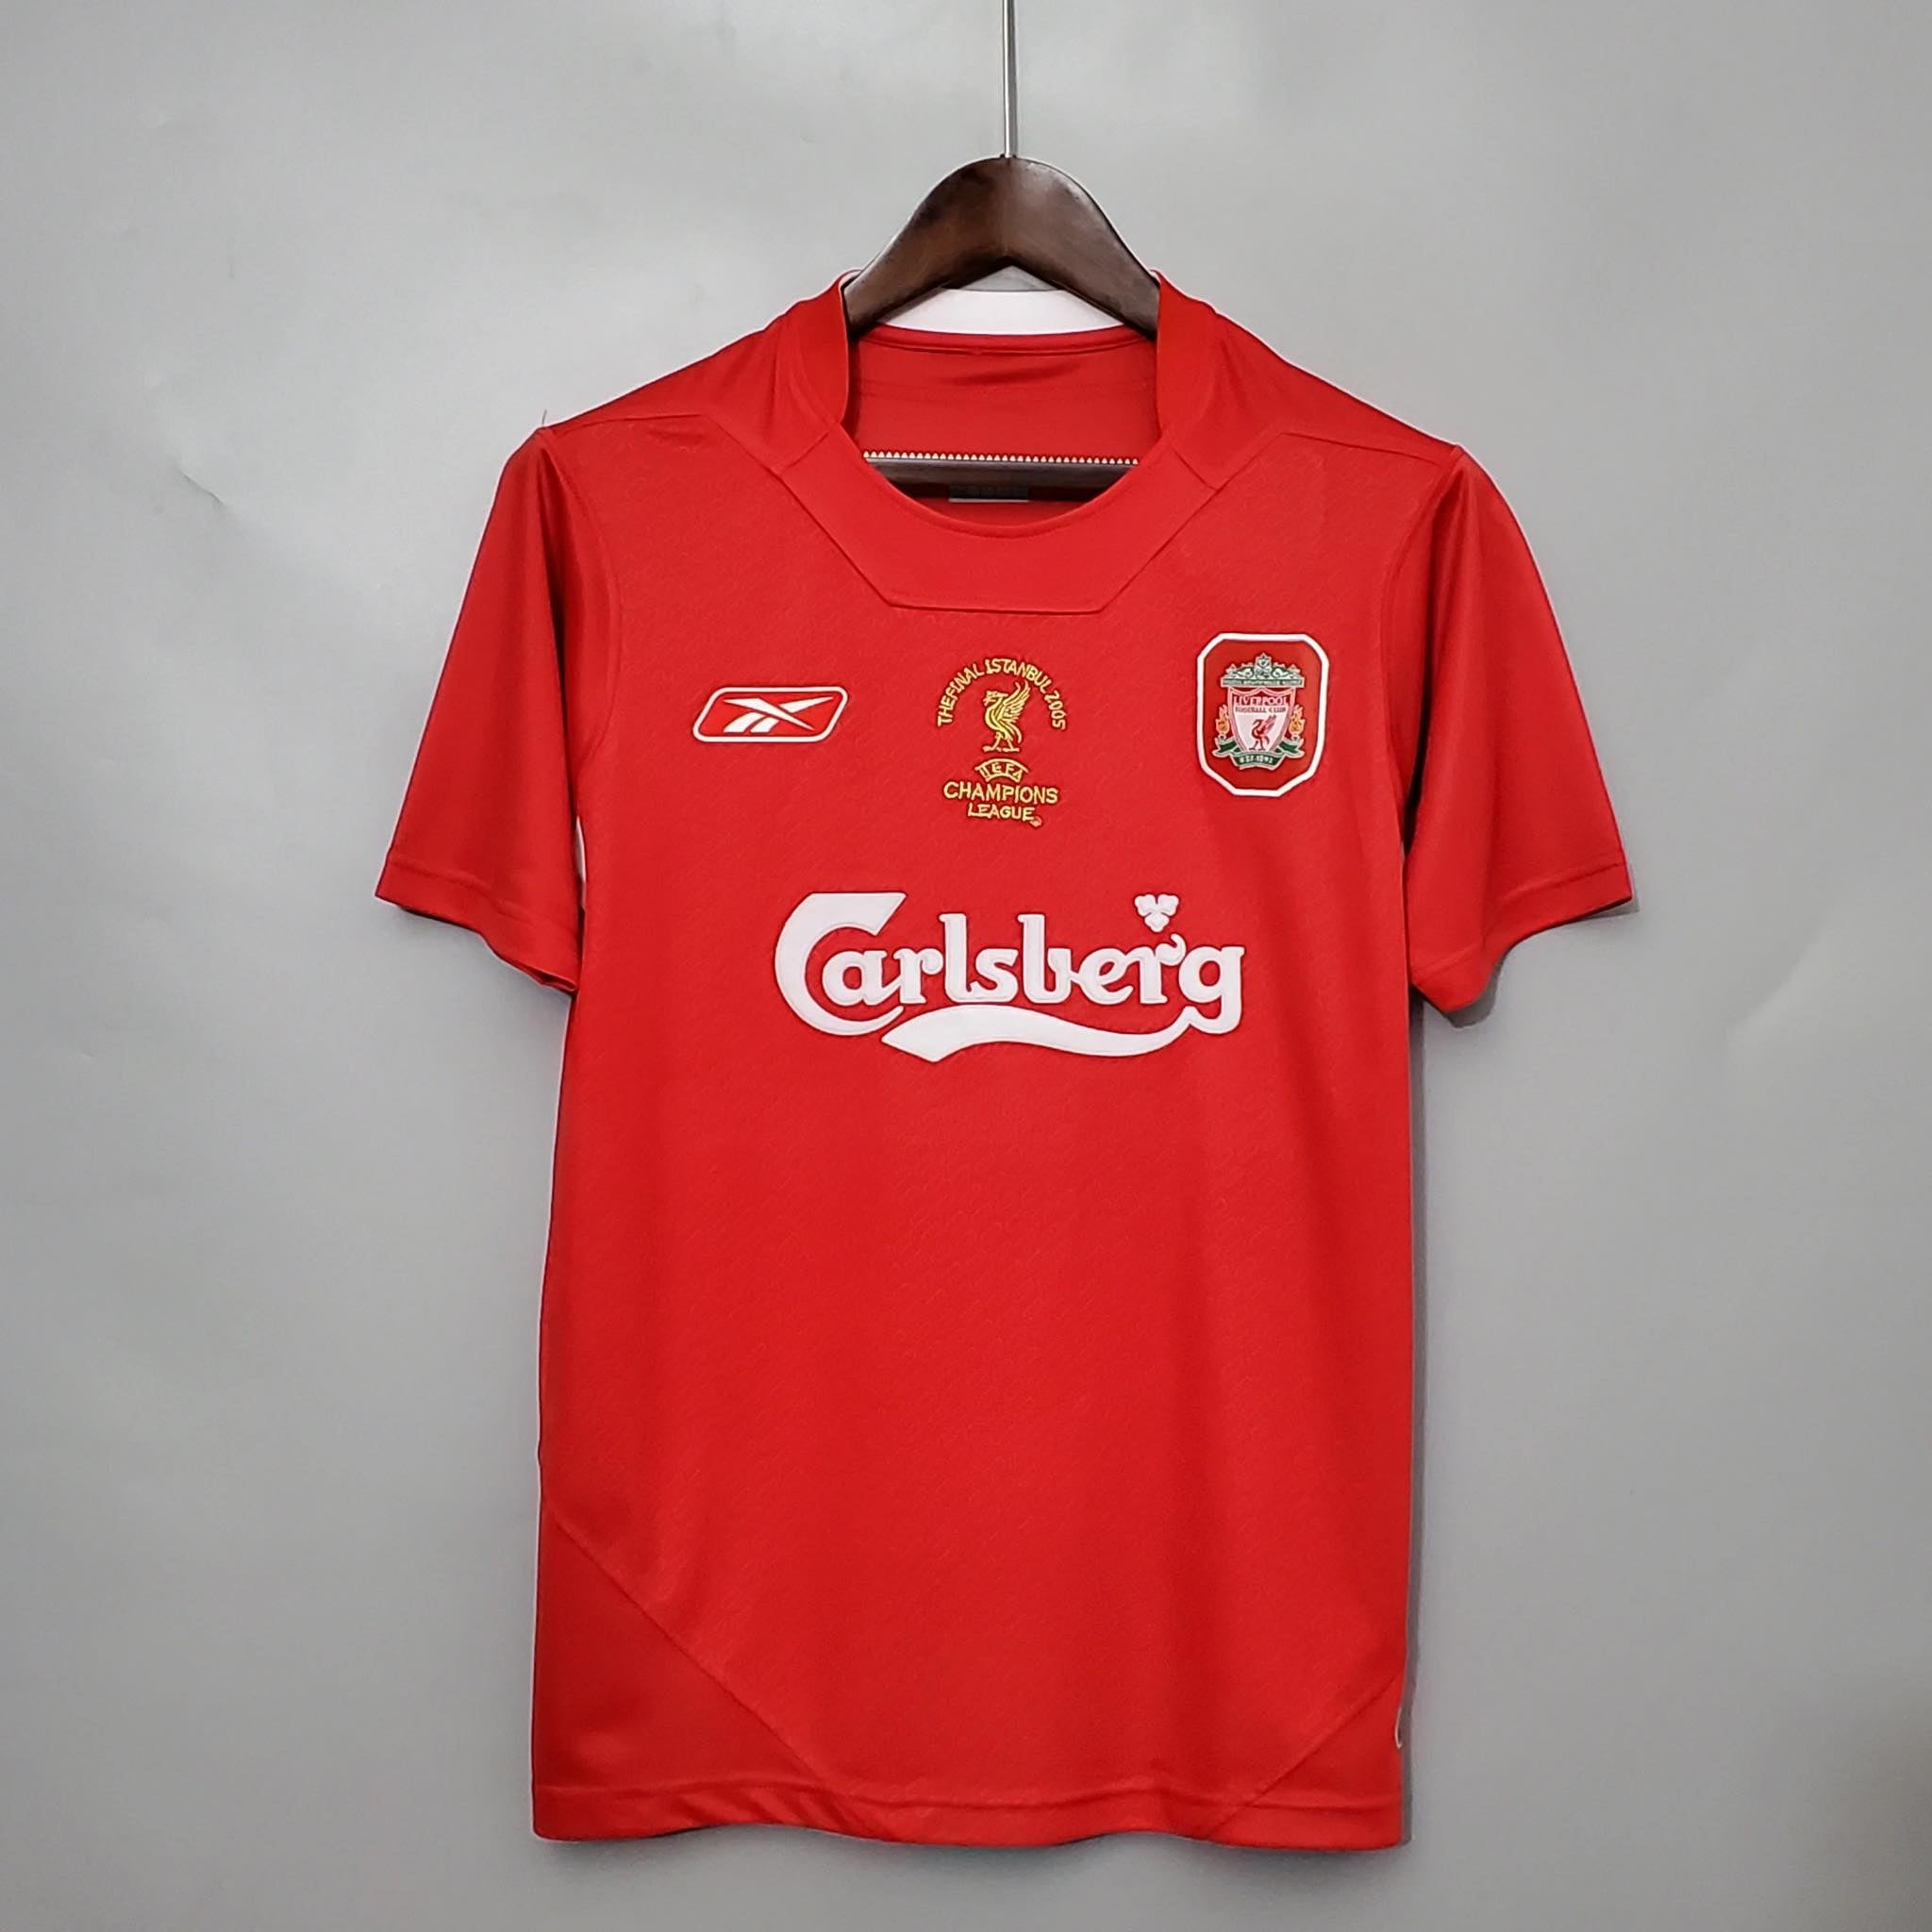 Liverpool 2005 Champions League Retro Jersey